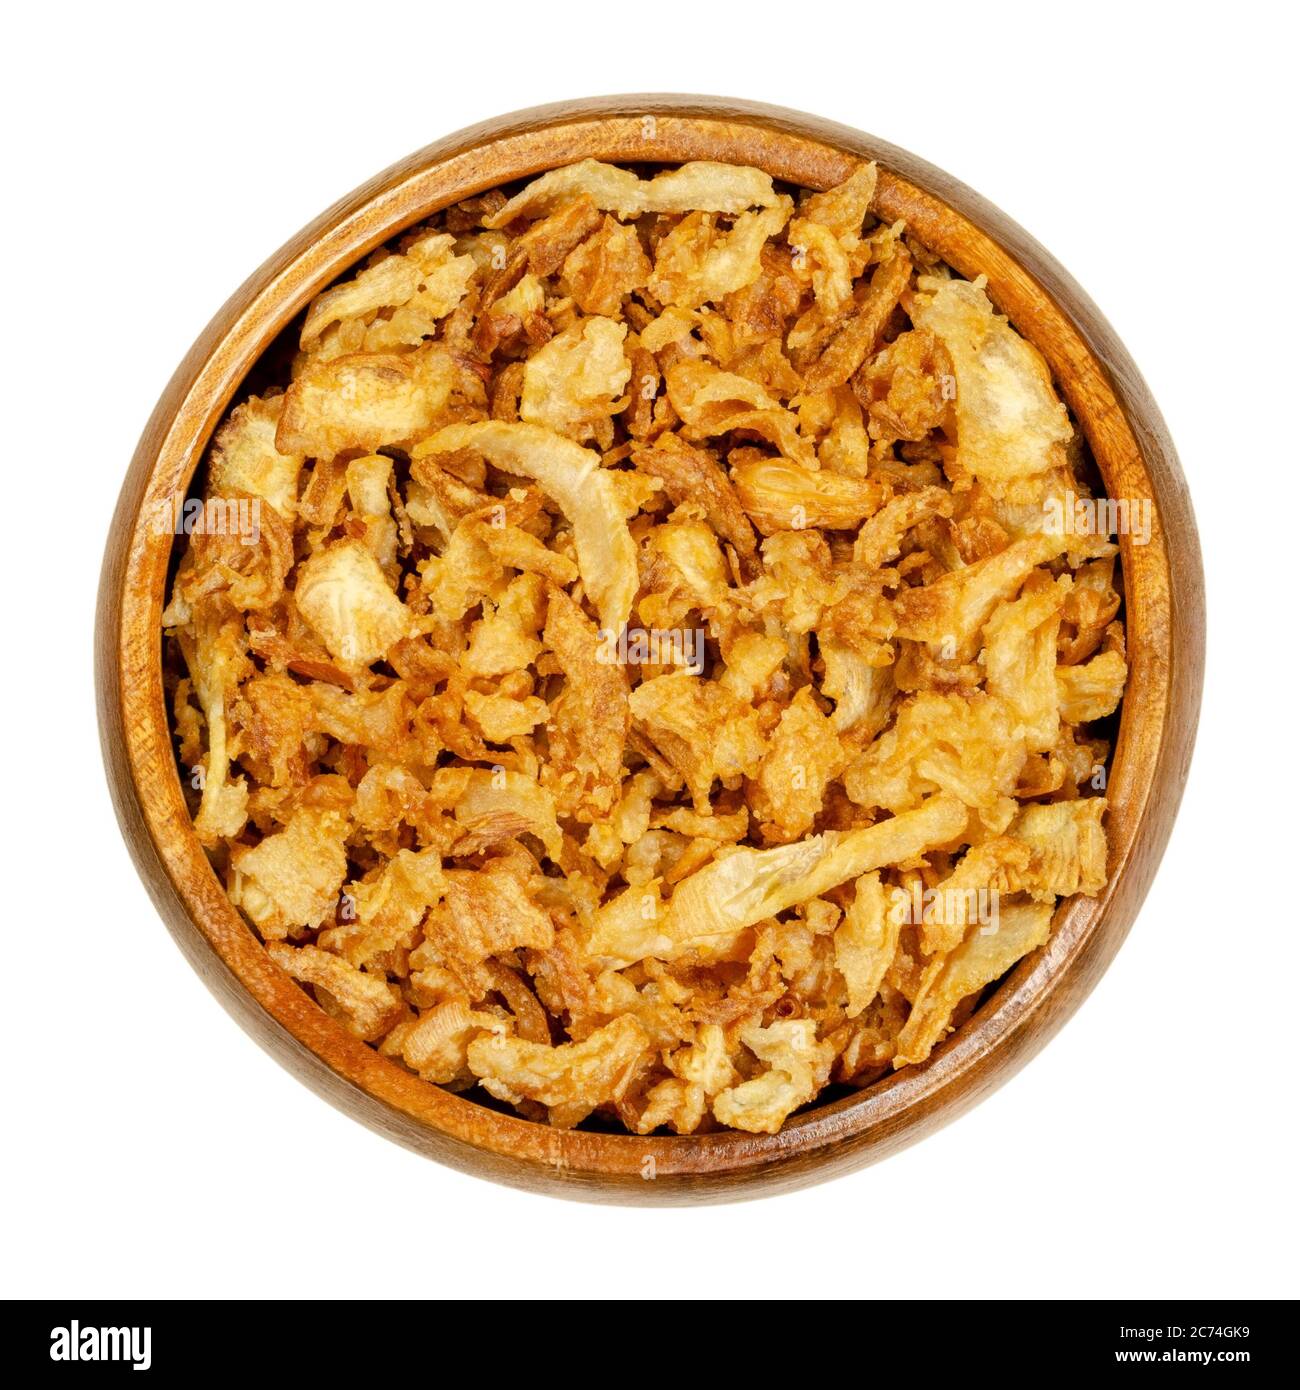 Cebollas fritas en un tazón de madera. Rebanadas fritas de cebolla, usadas como guarnición, también en hamburguesas o para decorar biryani. Primer plano, desde arriba. Foto de stock